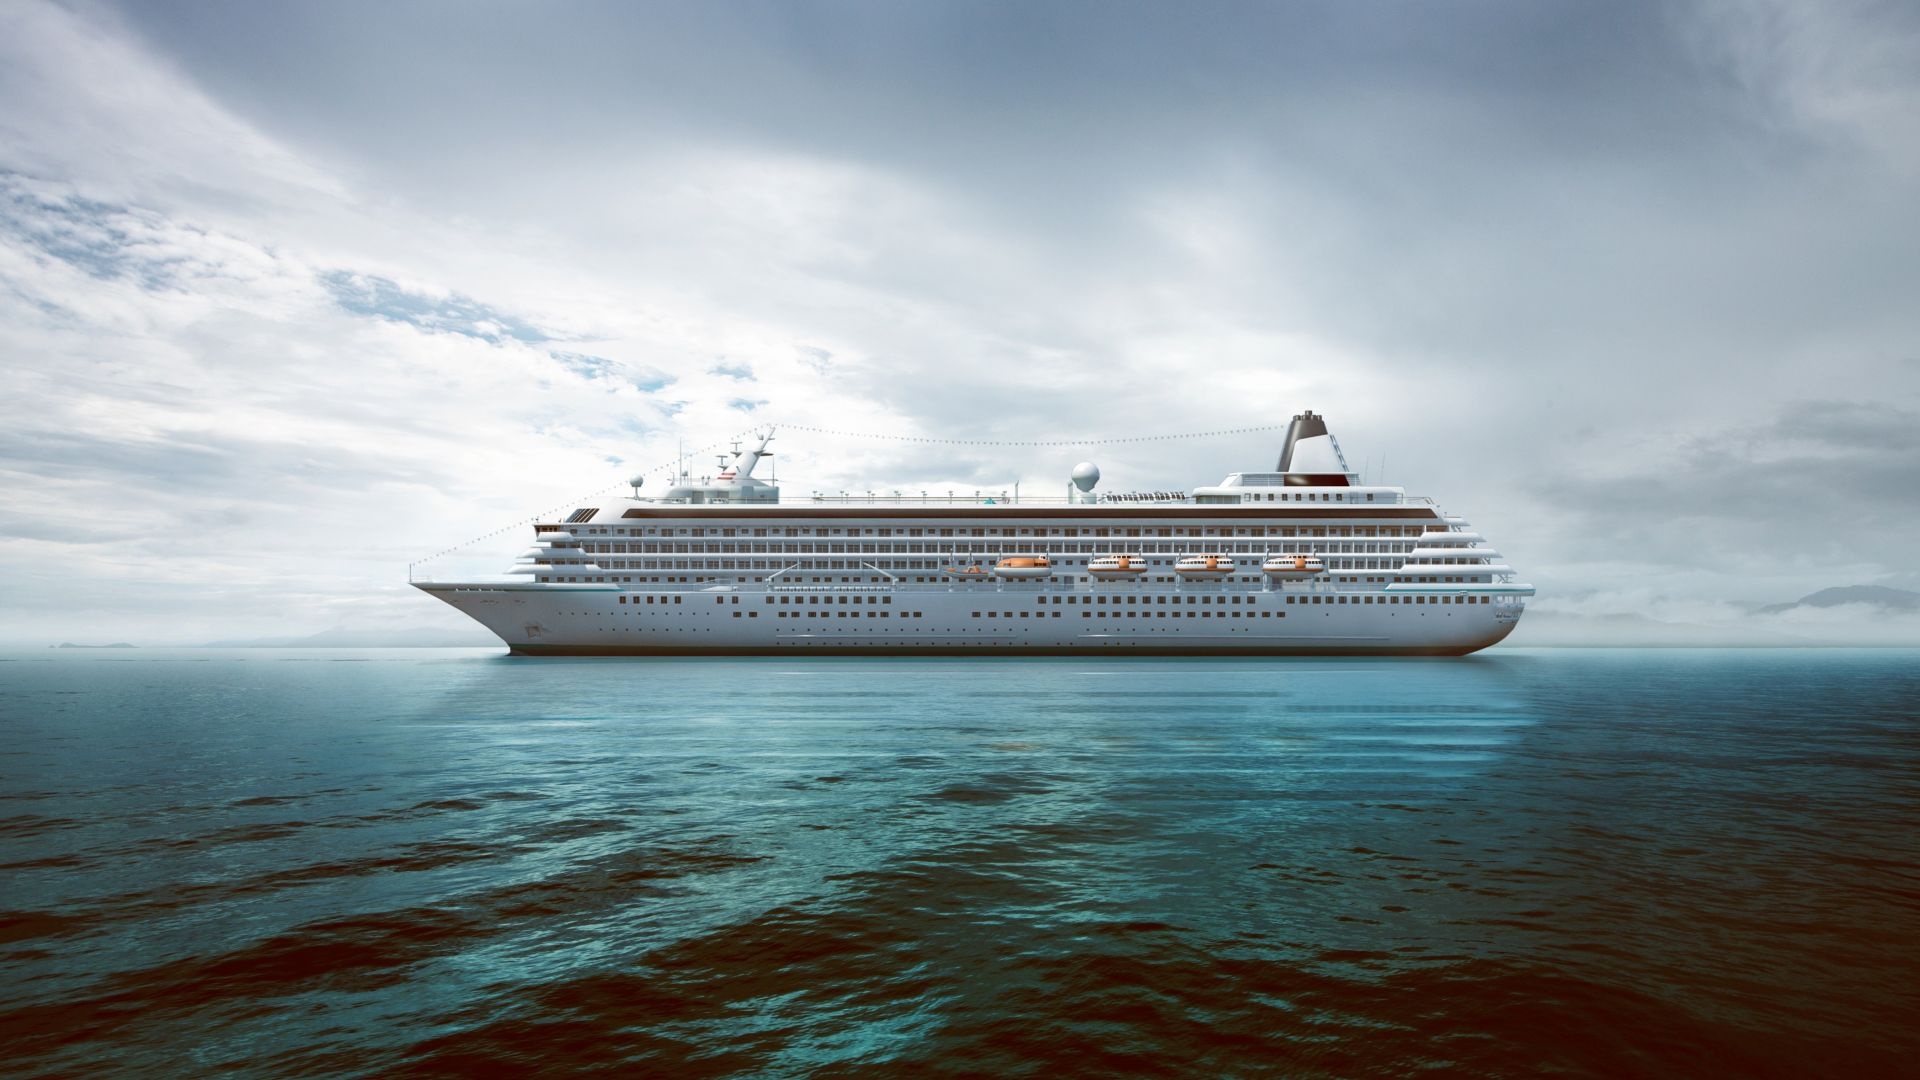 Cruise ship desktop wallpaper, Sea voyage backdrop, 4K image, Picture perfect, 1920x1080 Full HD Desktop